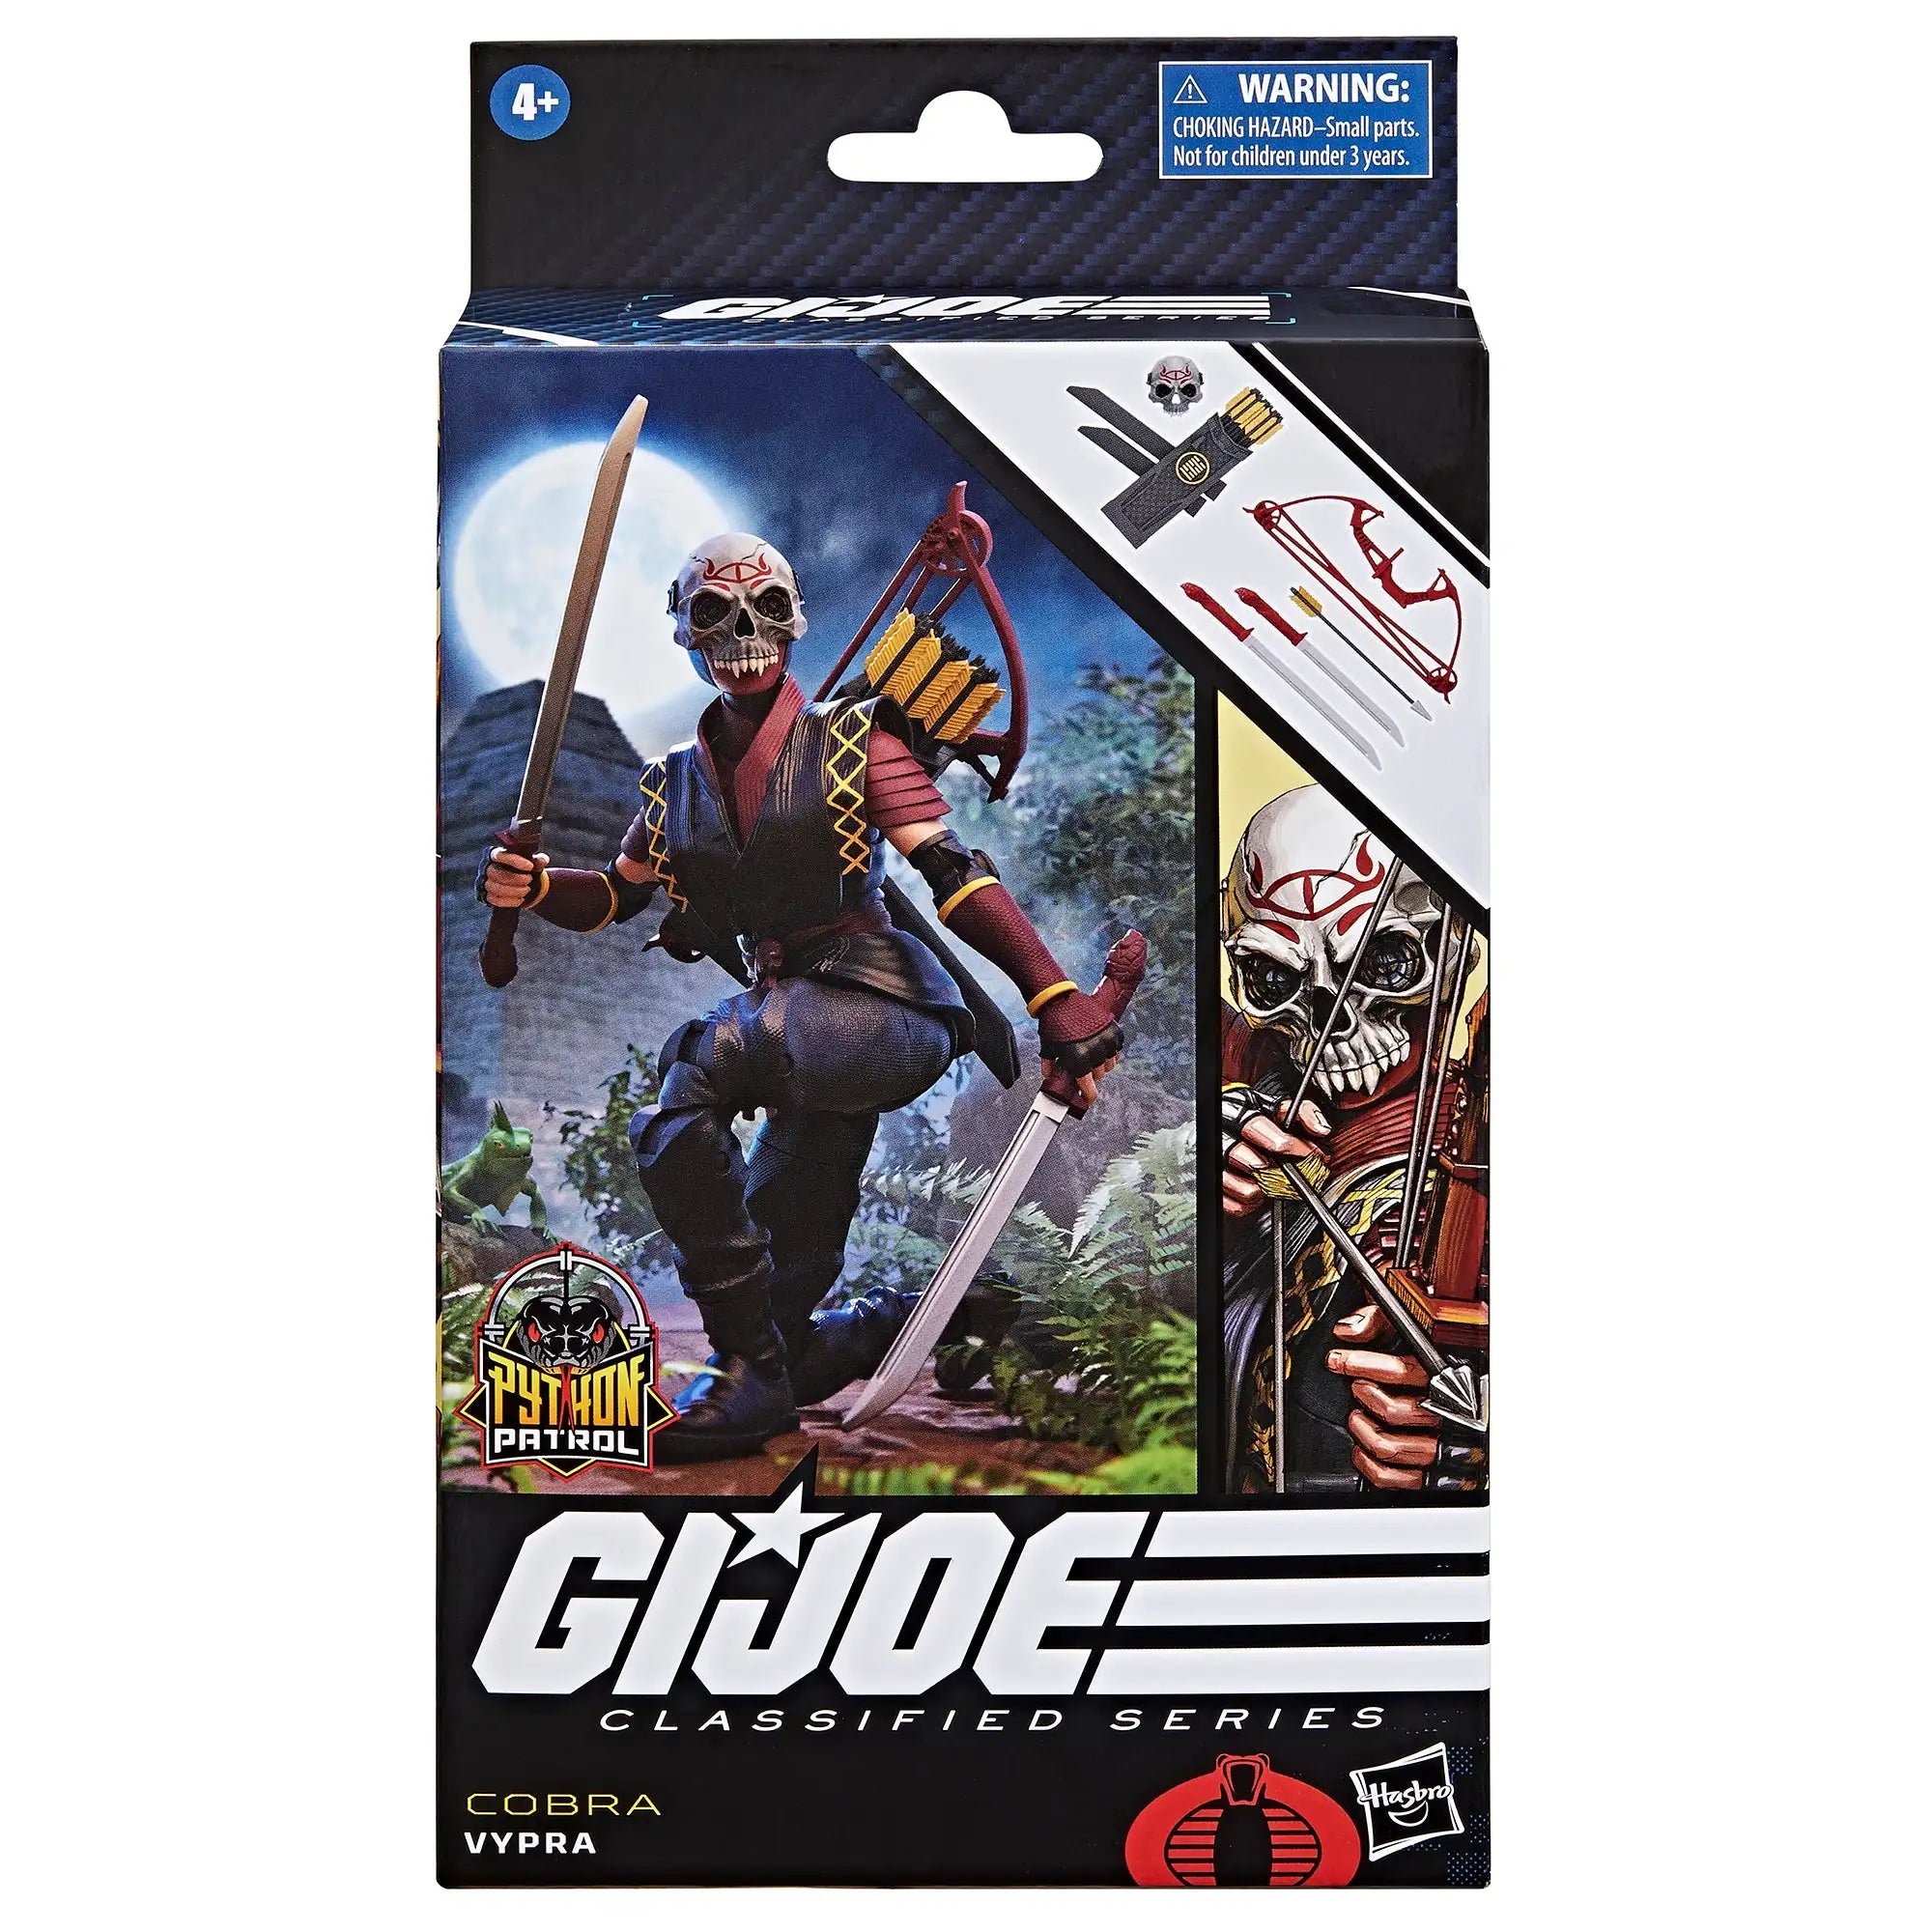 Hasbro G.I. Joe Classified Series Python Patrol Vypra Figure, 6-inch Action Figure